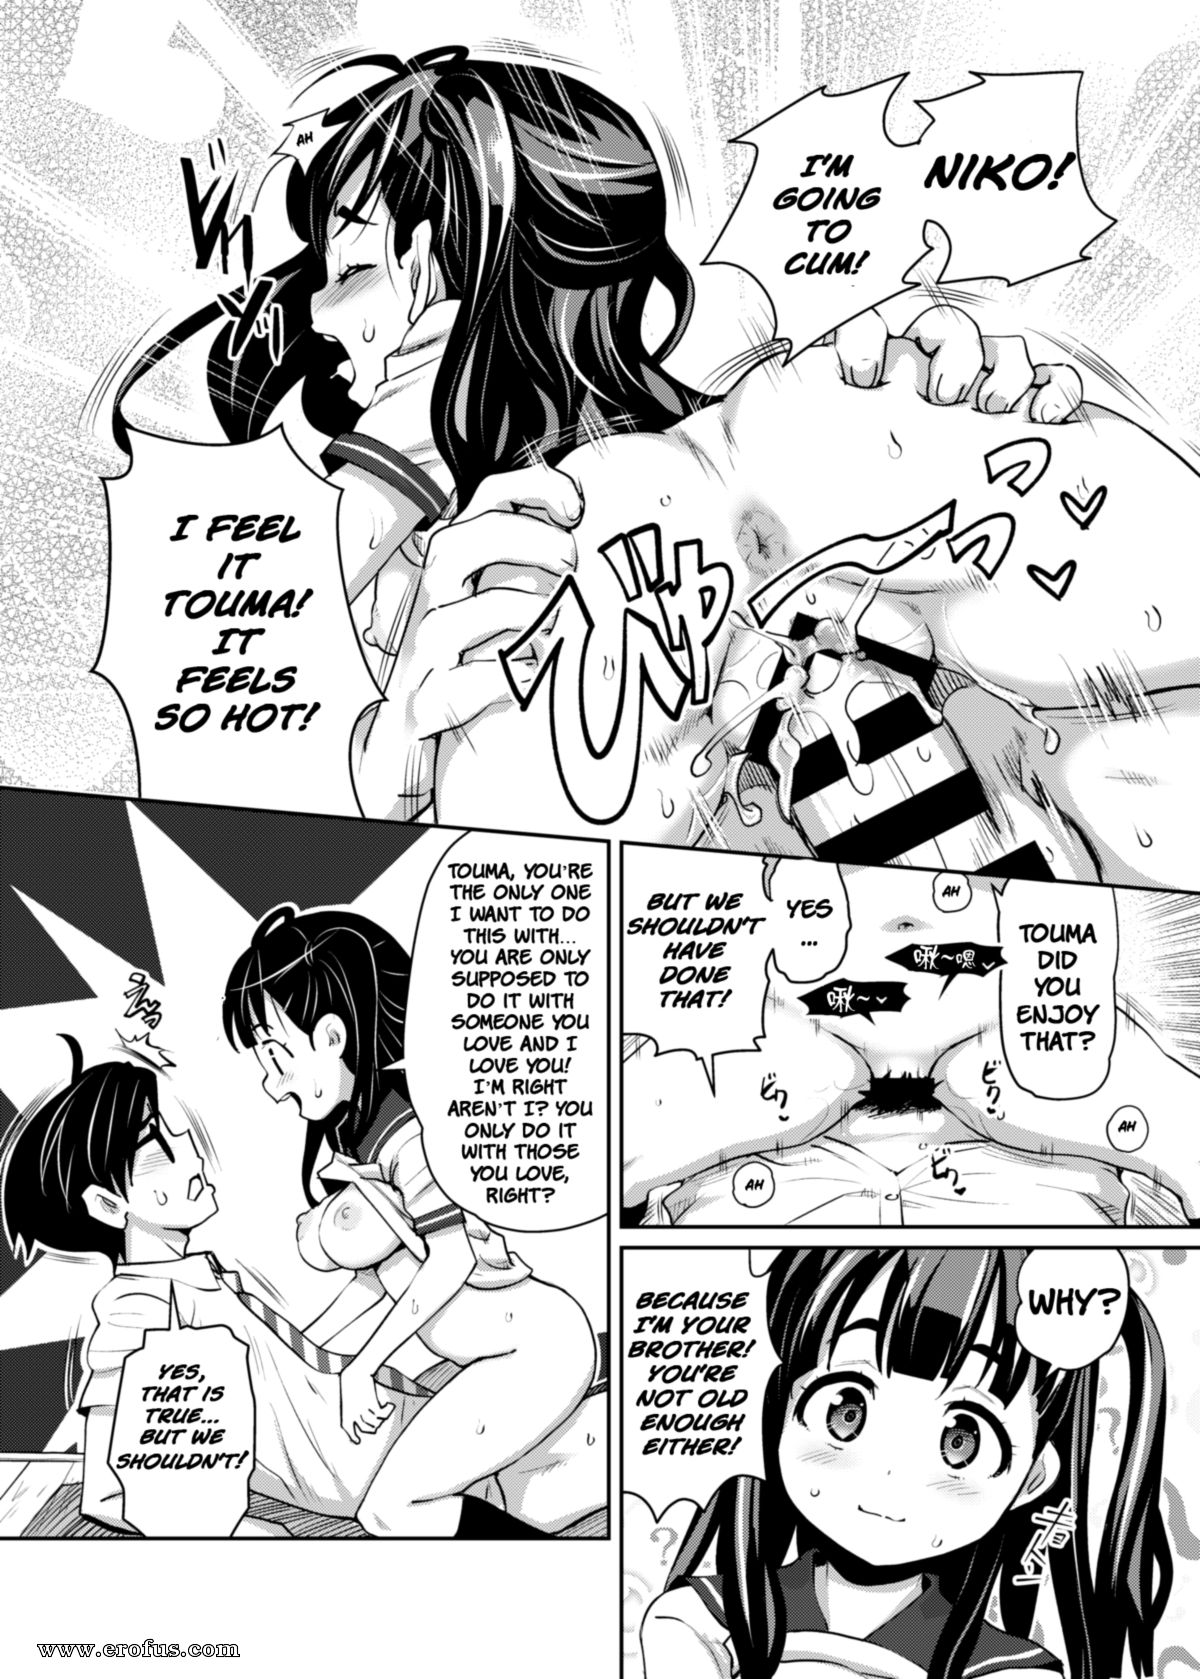 Little sister hentai manga